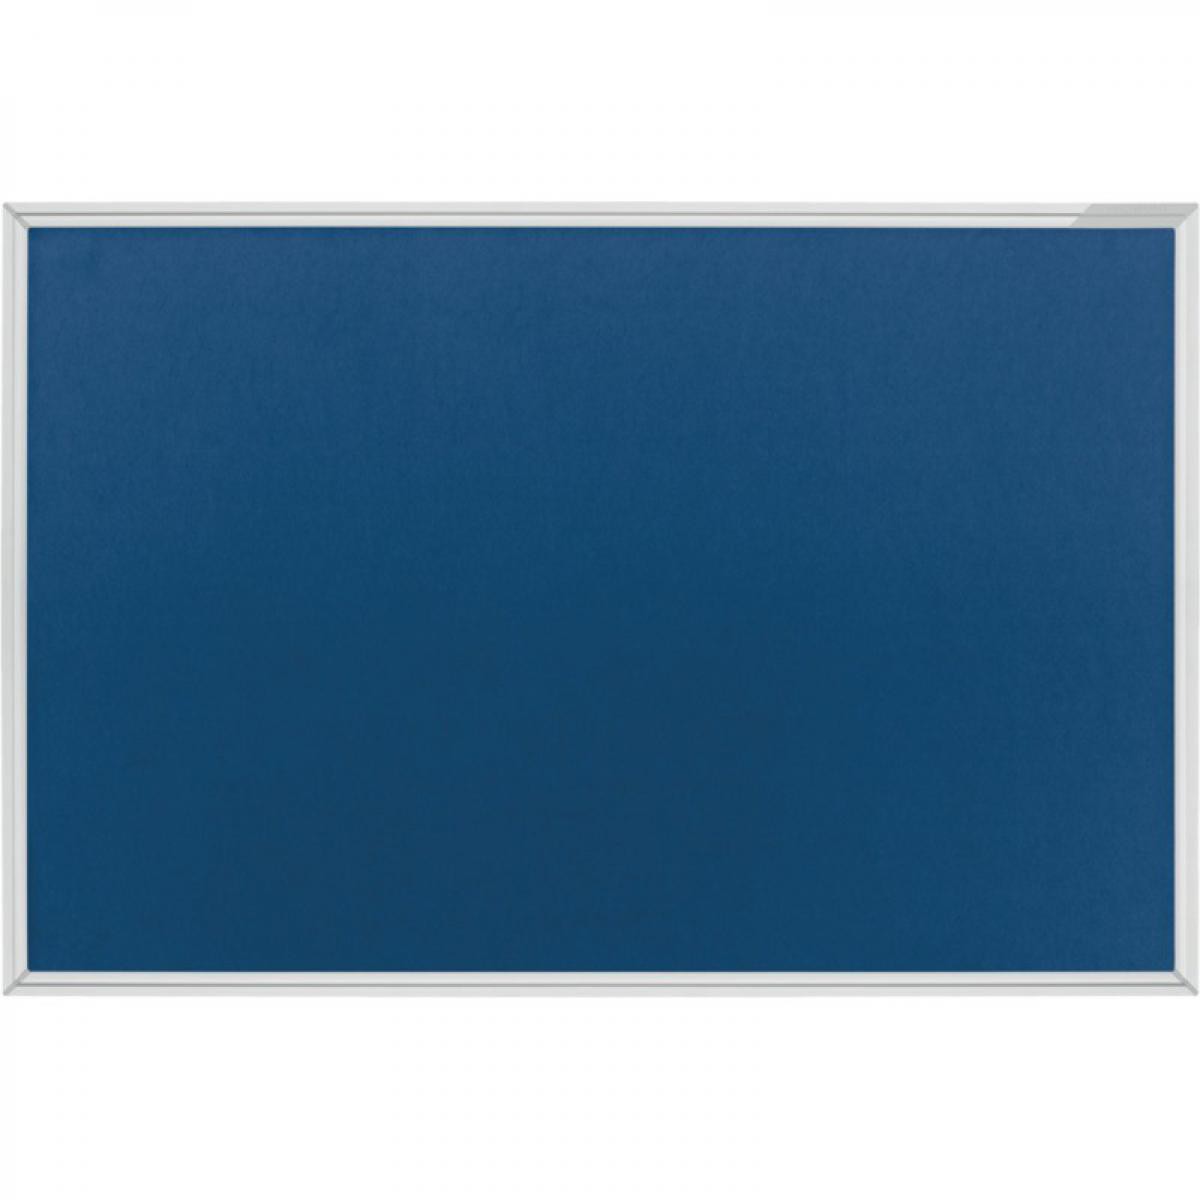 Magnetoplan - Tableau SP en textile bleu 900 x 600 mm - Visserie